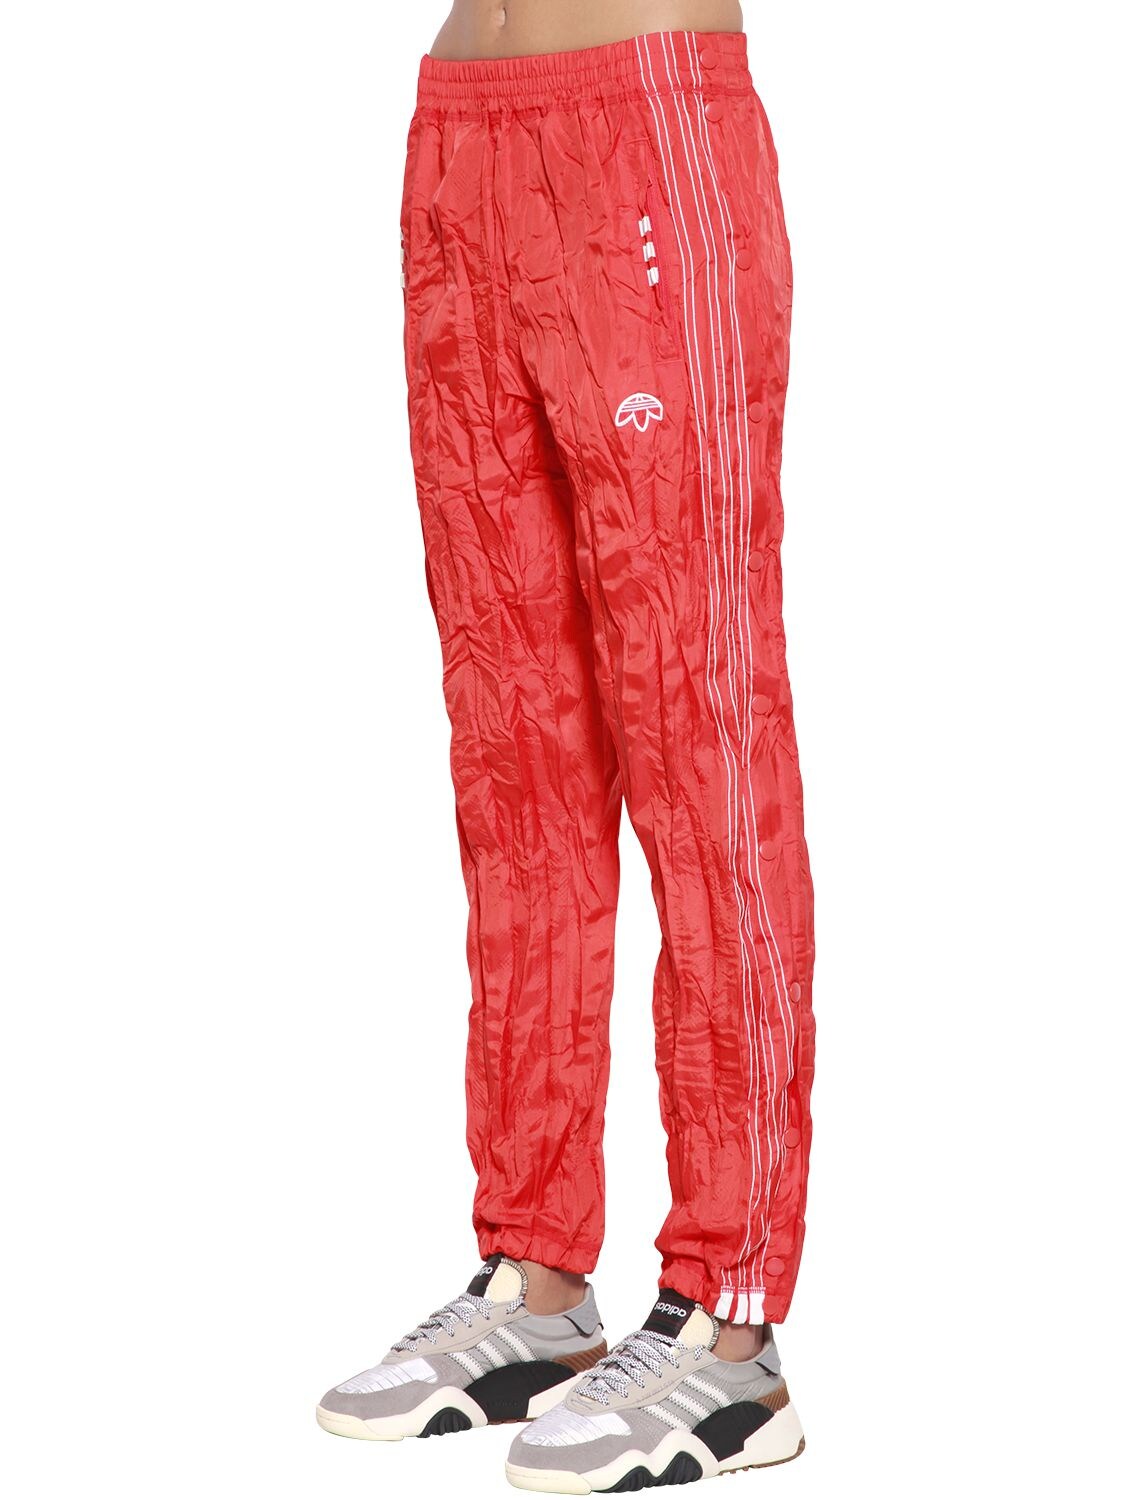 Adidas Originals By Alexander Wang Aw Wrinkled Tear Away Track Pants In  Orange | ModeSens